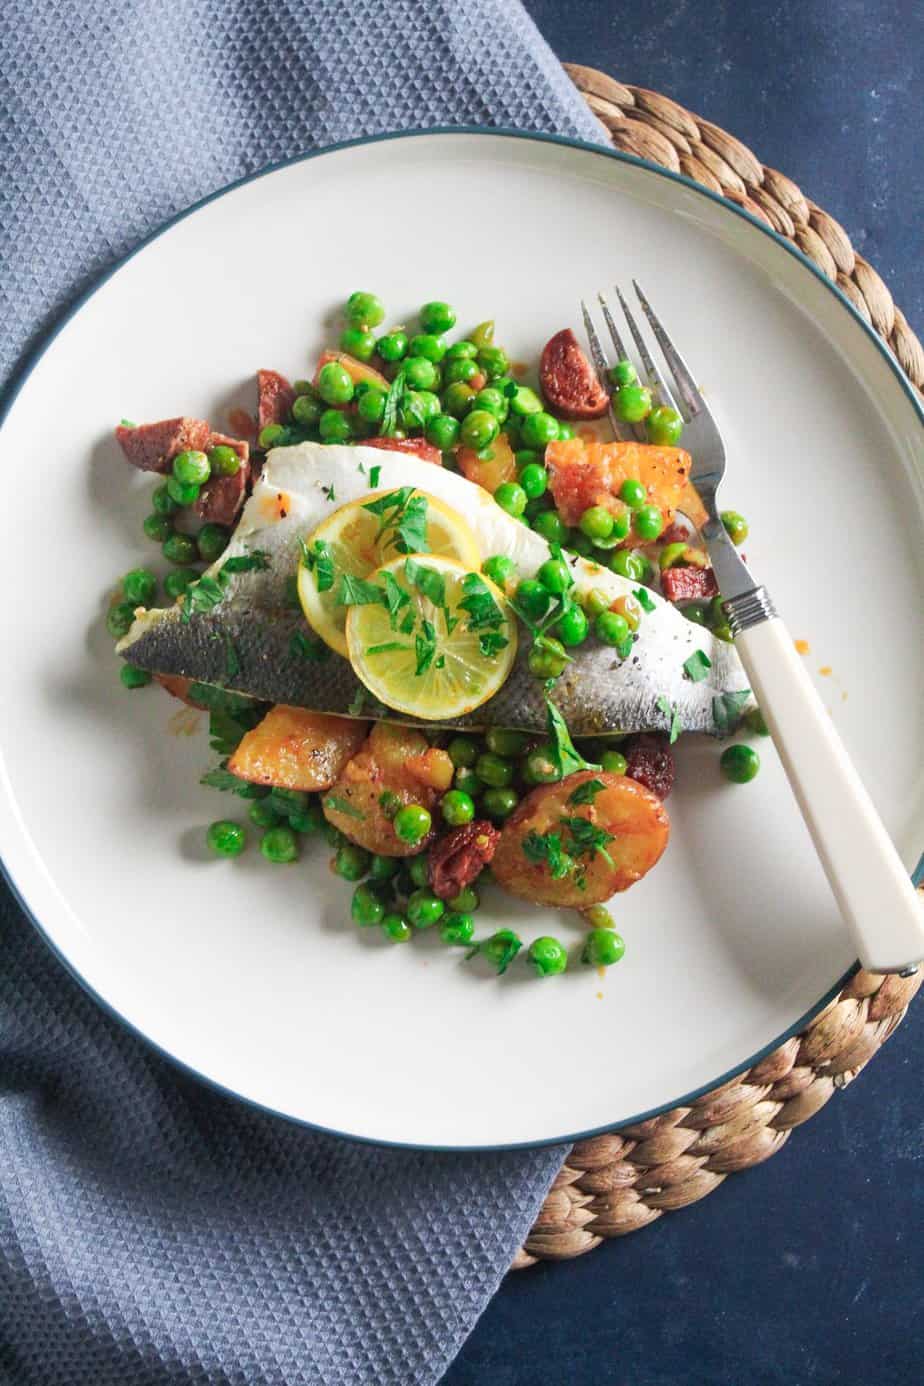 Sea Bass and Chorizo Traybake with Peas and Potato